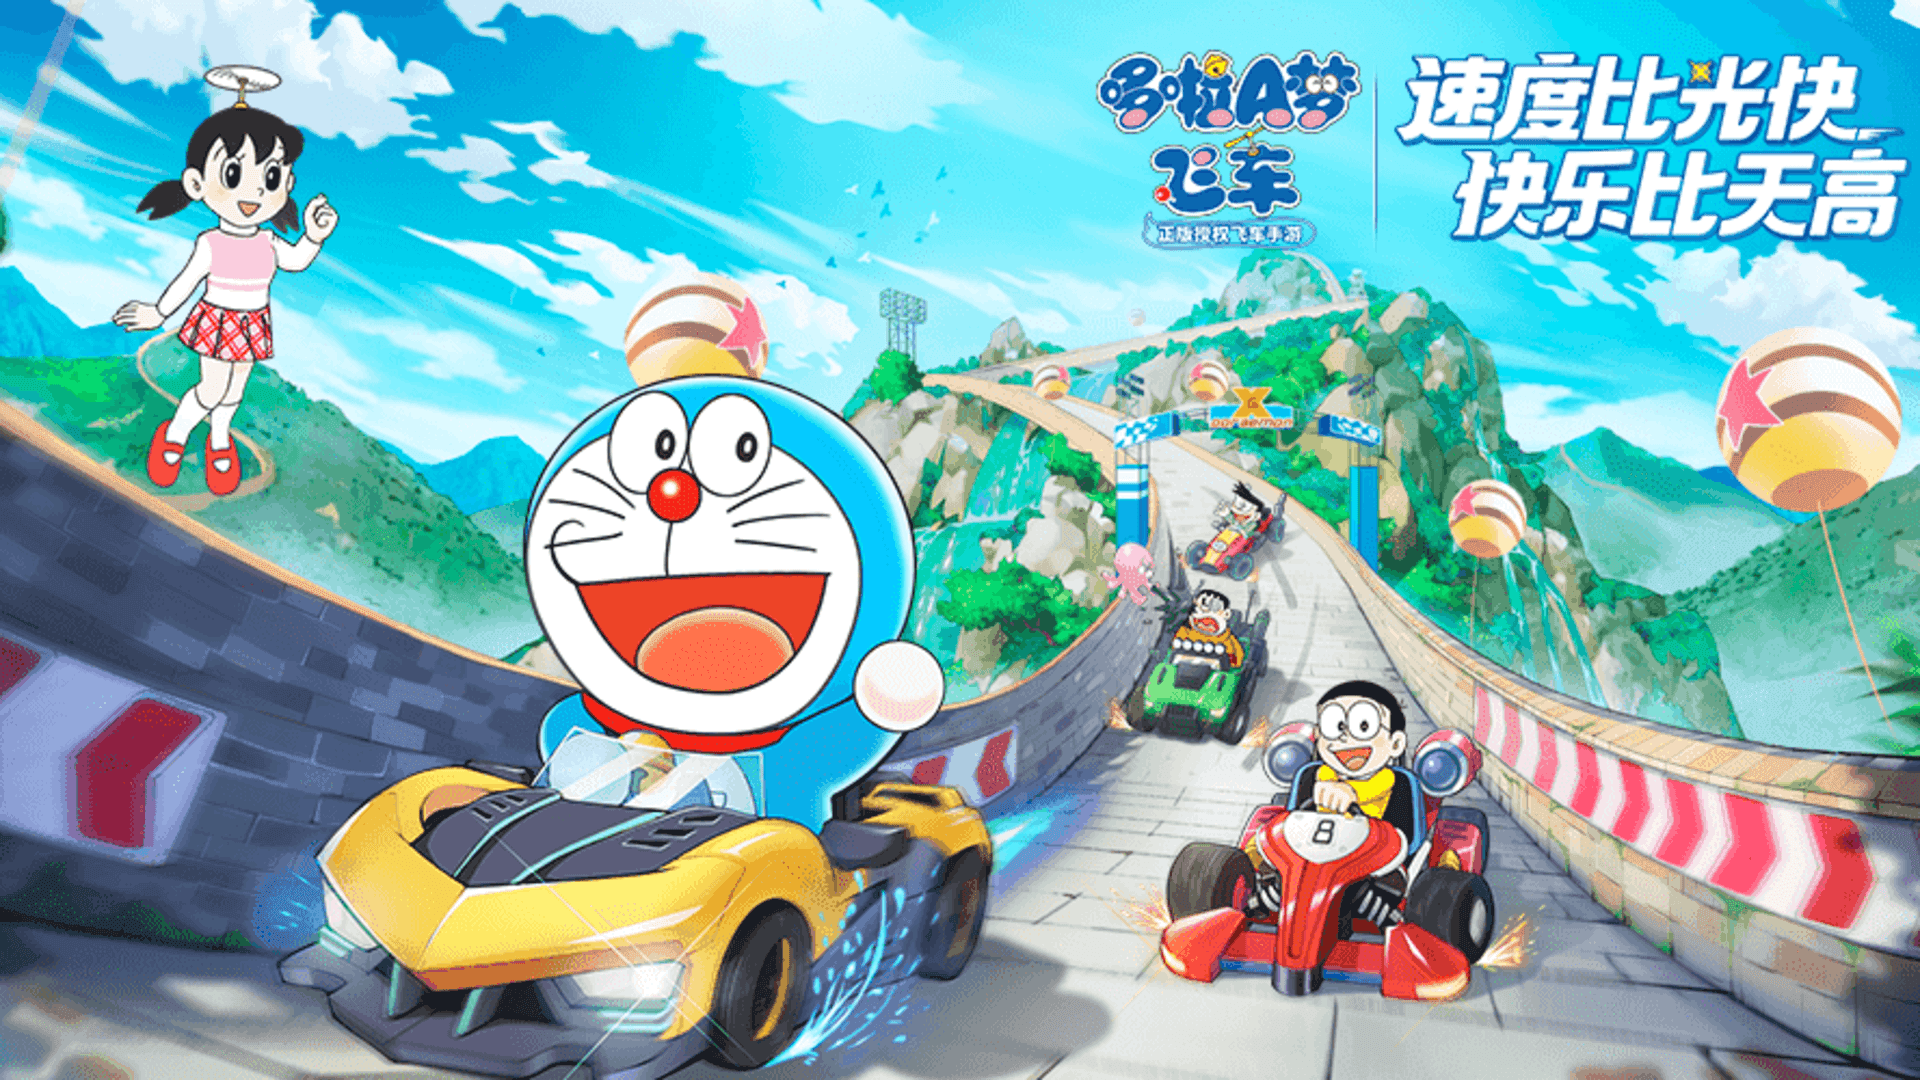 Banner of Kecepatan Doraemon 